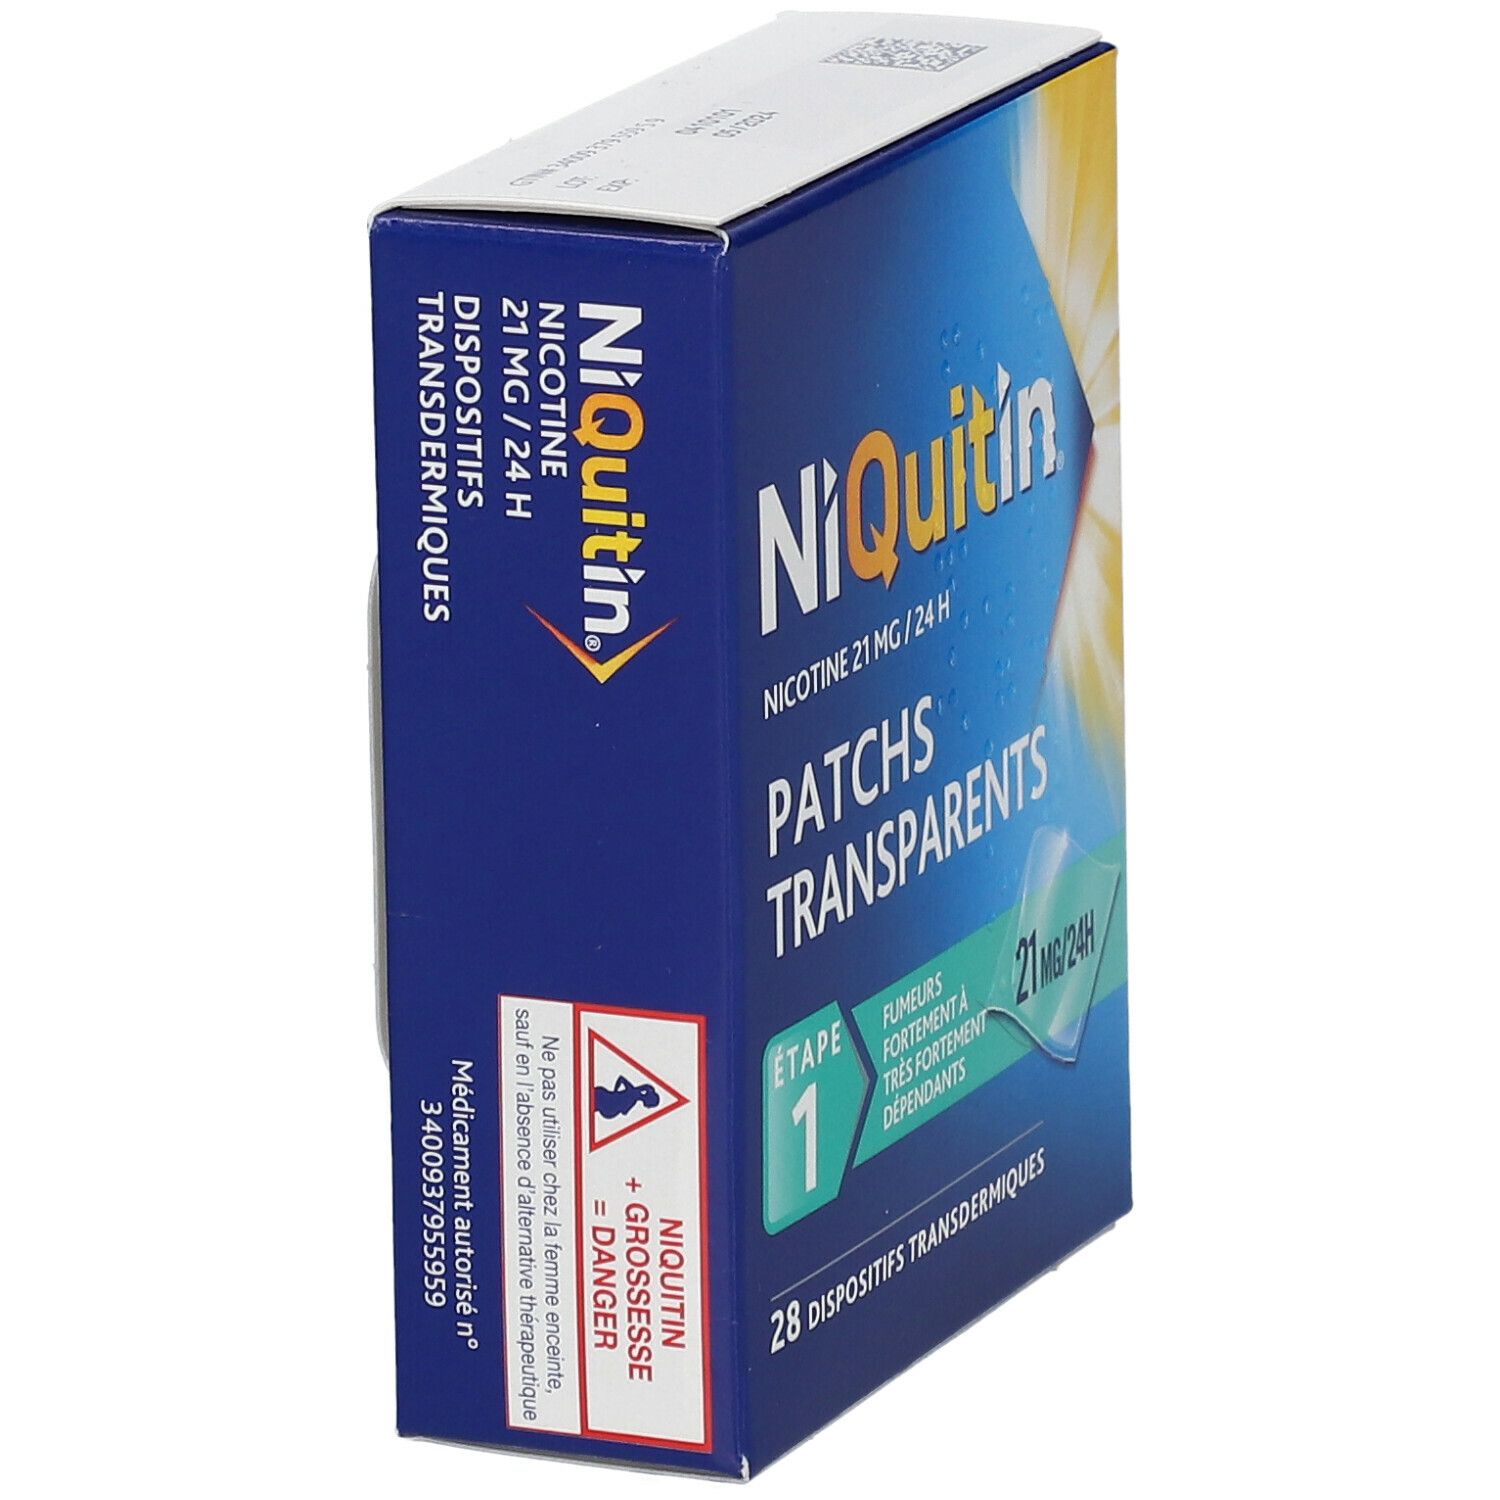 NiQuitin® Nicotine 21 mg/24 H